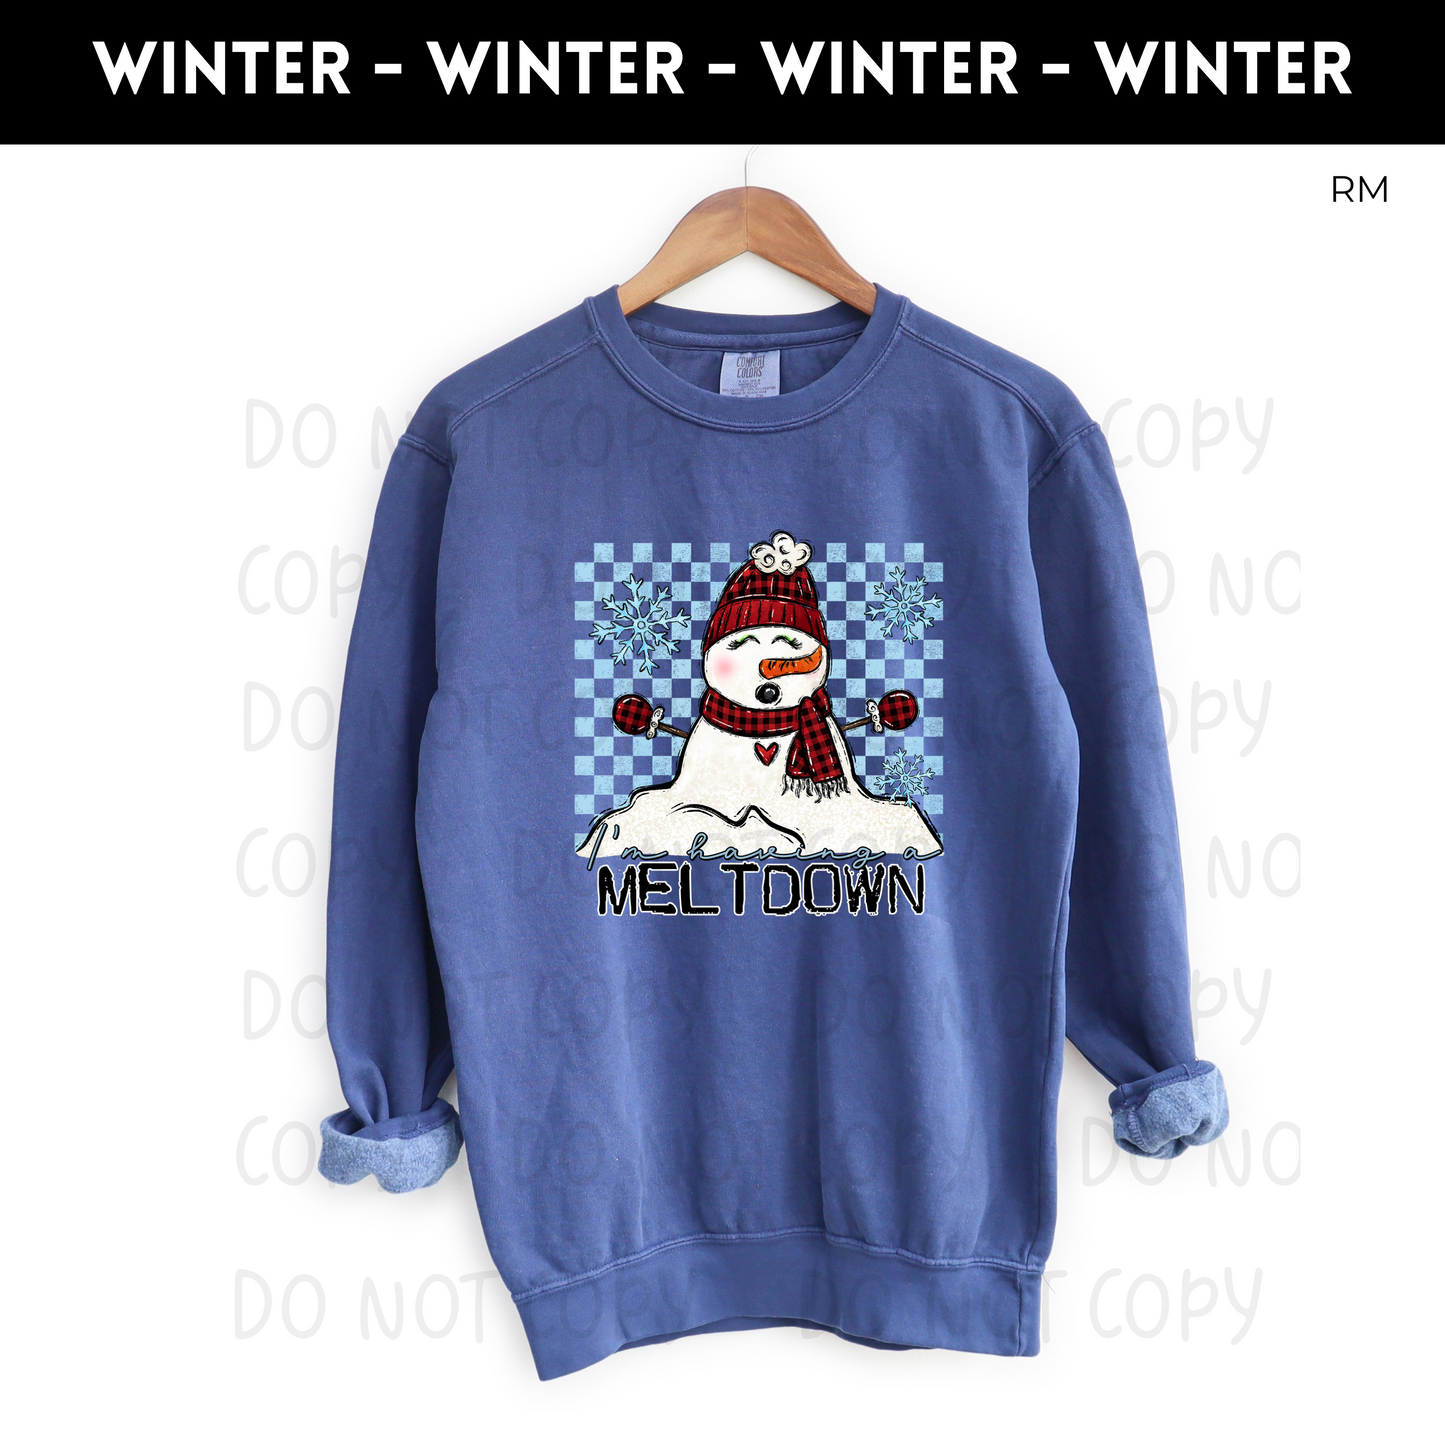 Meltdown Adult Sweatshirt- Winter 20